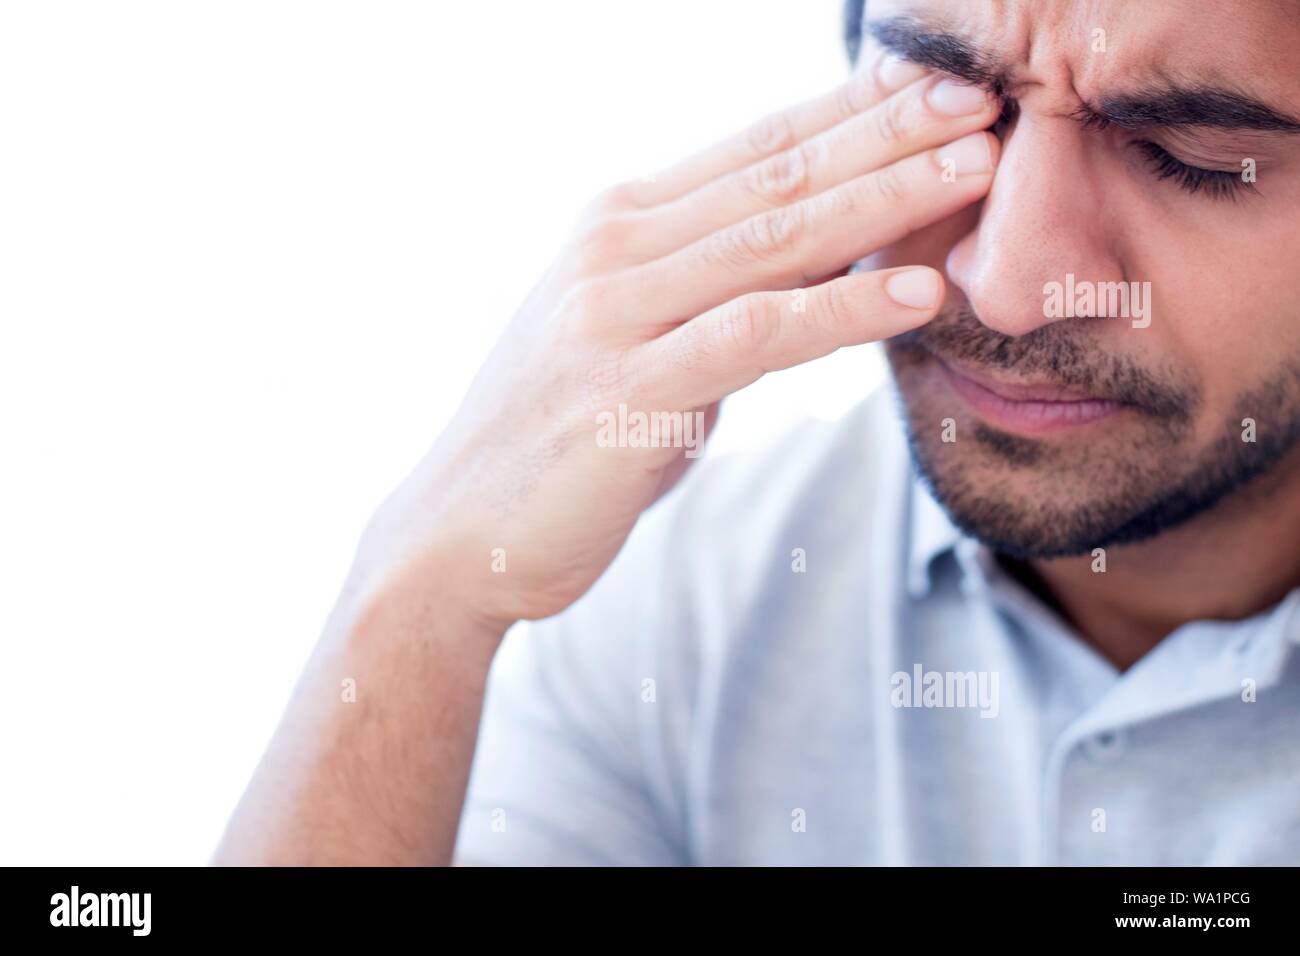 Man rubbing his right eye. Stock Photo